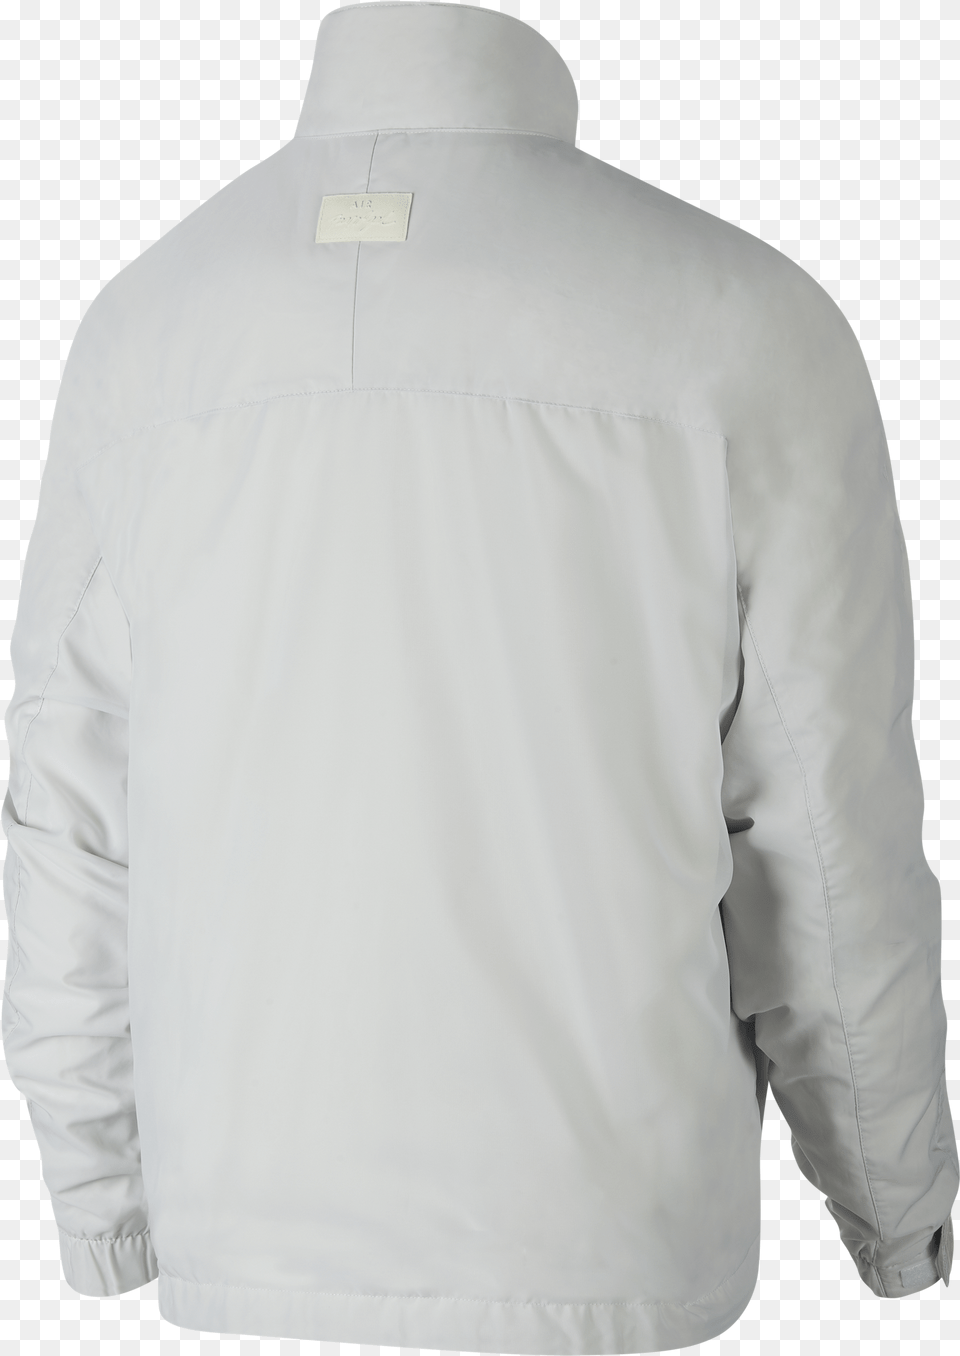 Fear Of God X Nike Nrg Half Zip Jacket Pocket, Clothing, Coat, Long Sleeve, Shirt Free Transparent Png